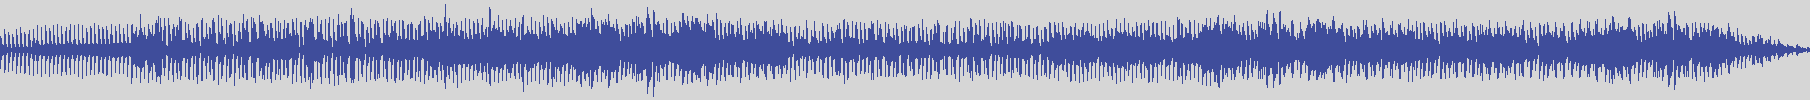 digiphonic_records [DPR013] Little Tony - Sweet Caroline [Original Mix] audio wave form